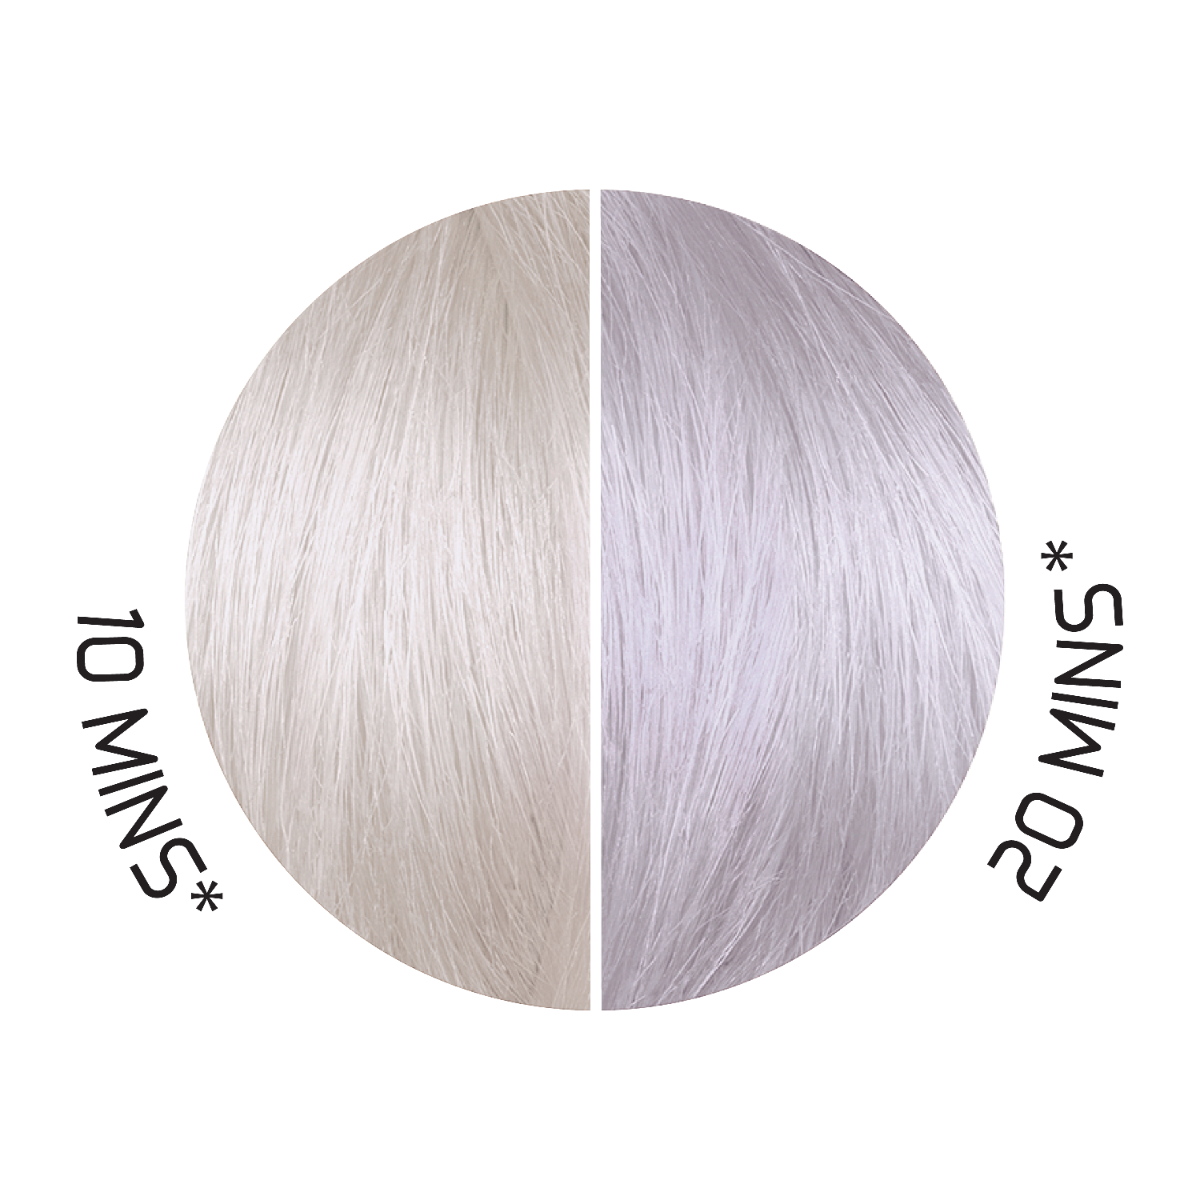 Swatch of Splat Hair Color&#39;s Toners Platinum Blonde Hair Dye